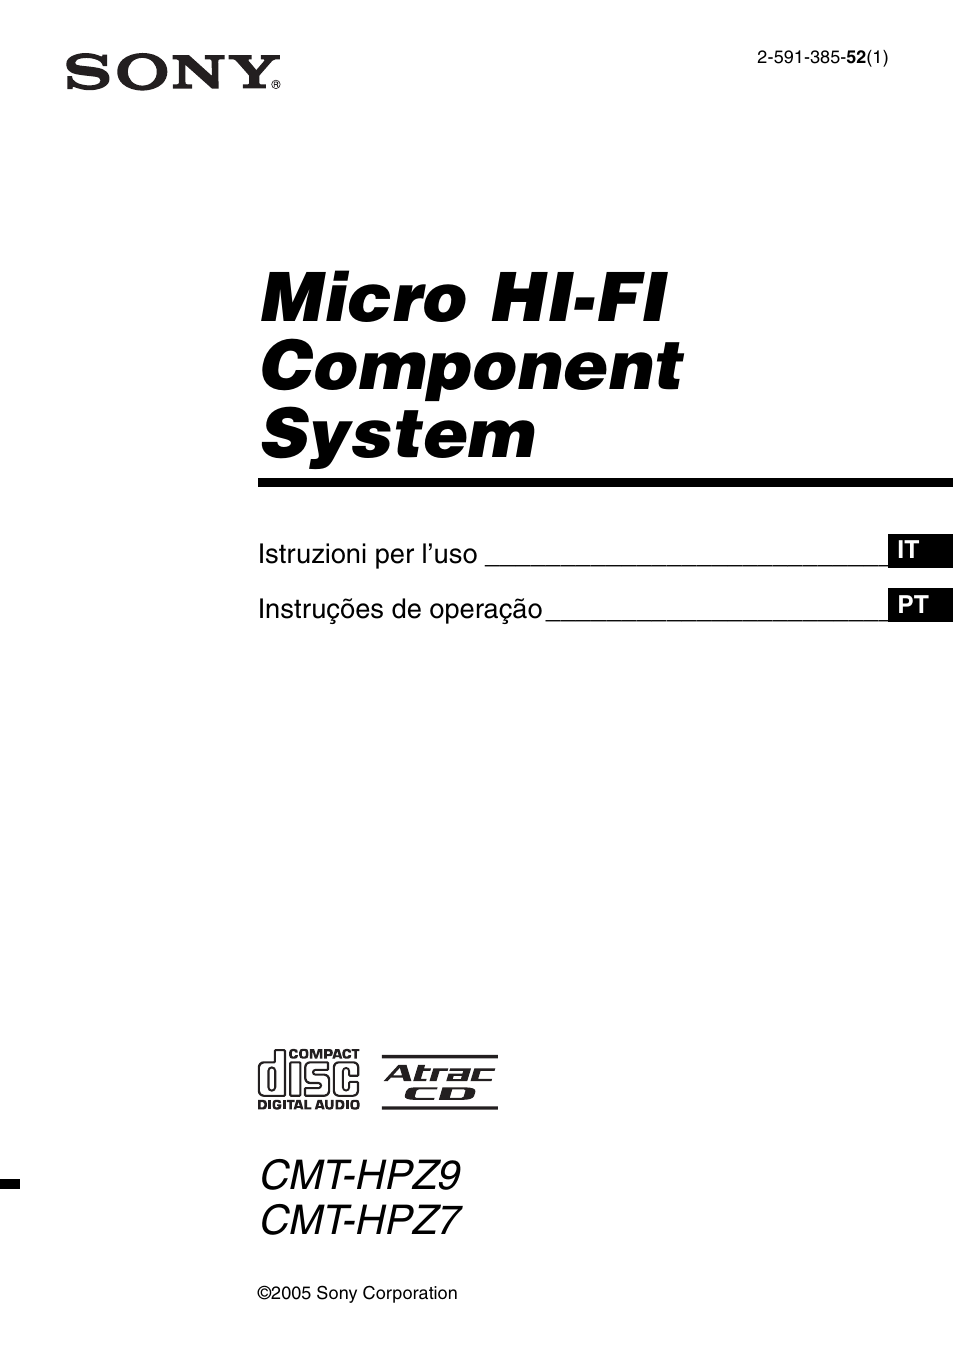 Sony CMT HPZ7 Manuale d'uso | Pagine: 80